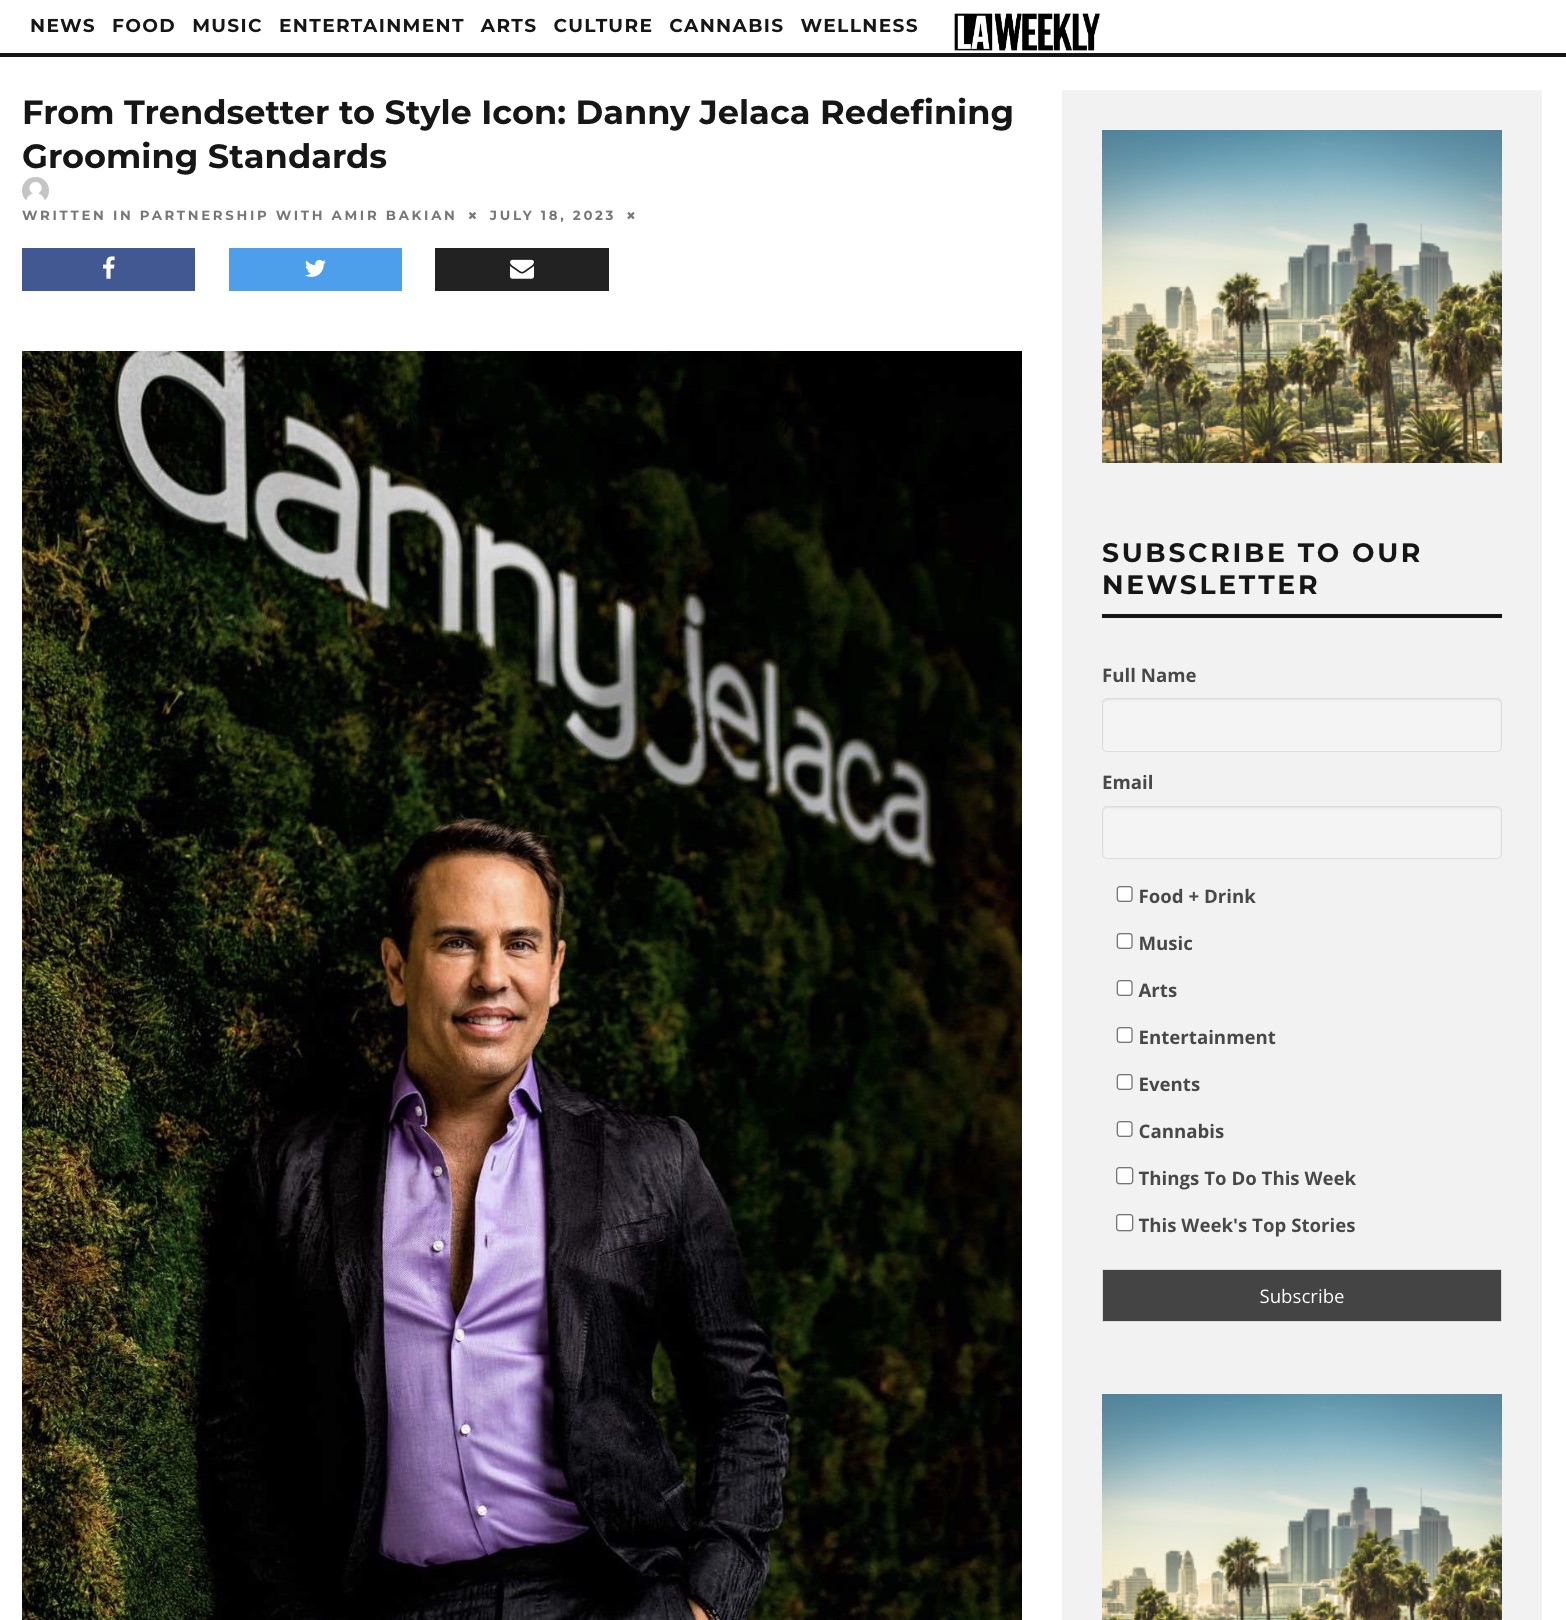 LA Weel;y Screenshot of the Article About Danny Jelaca